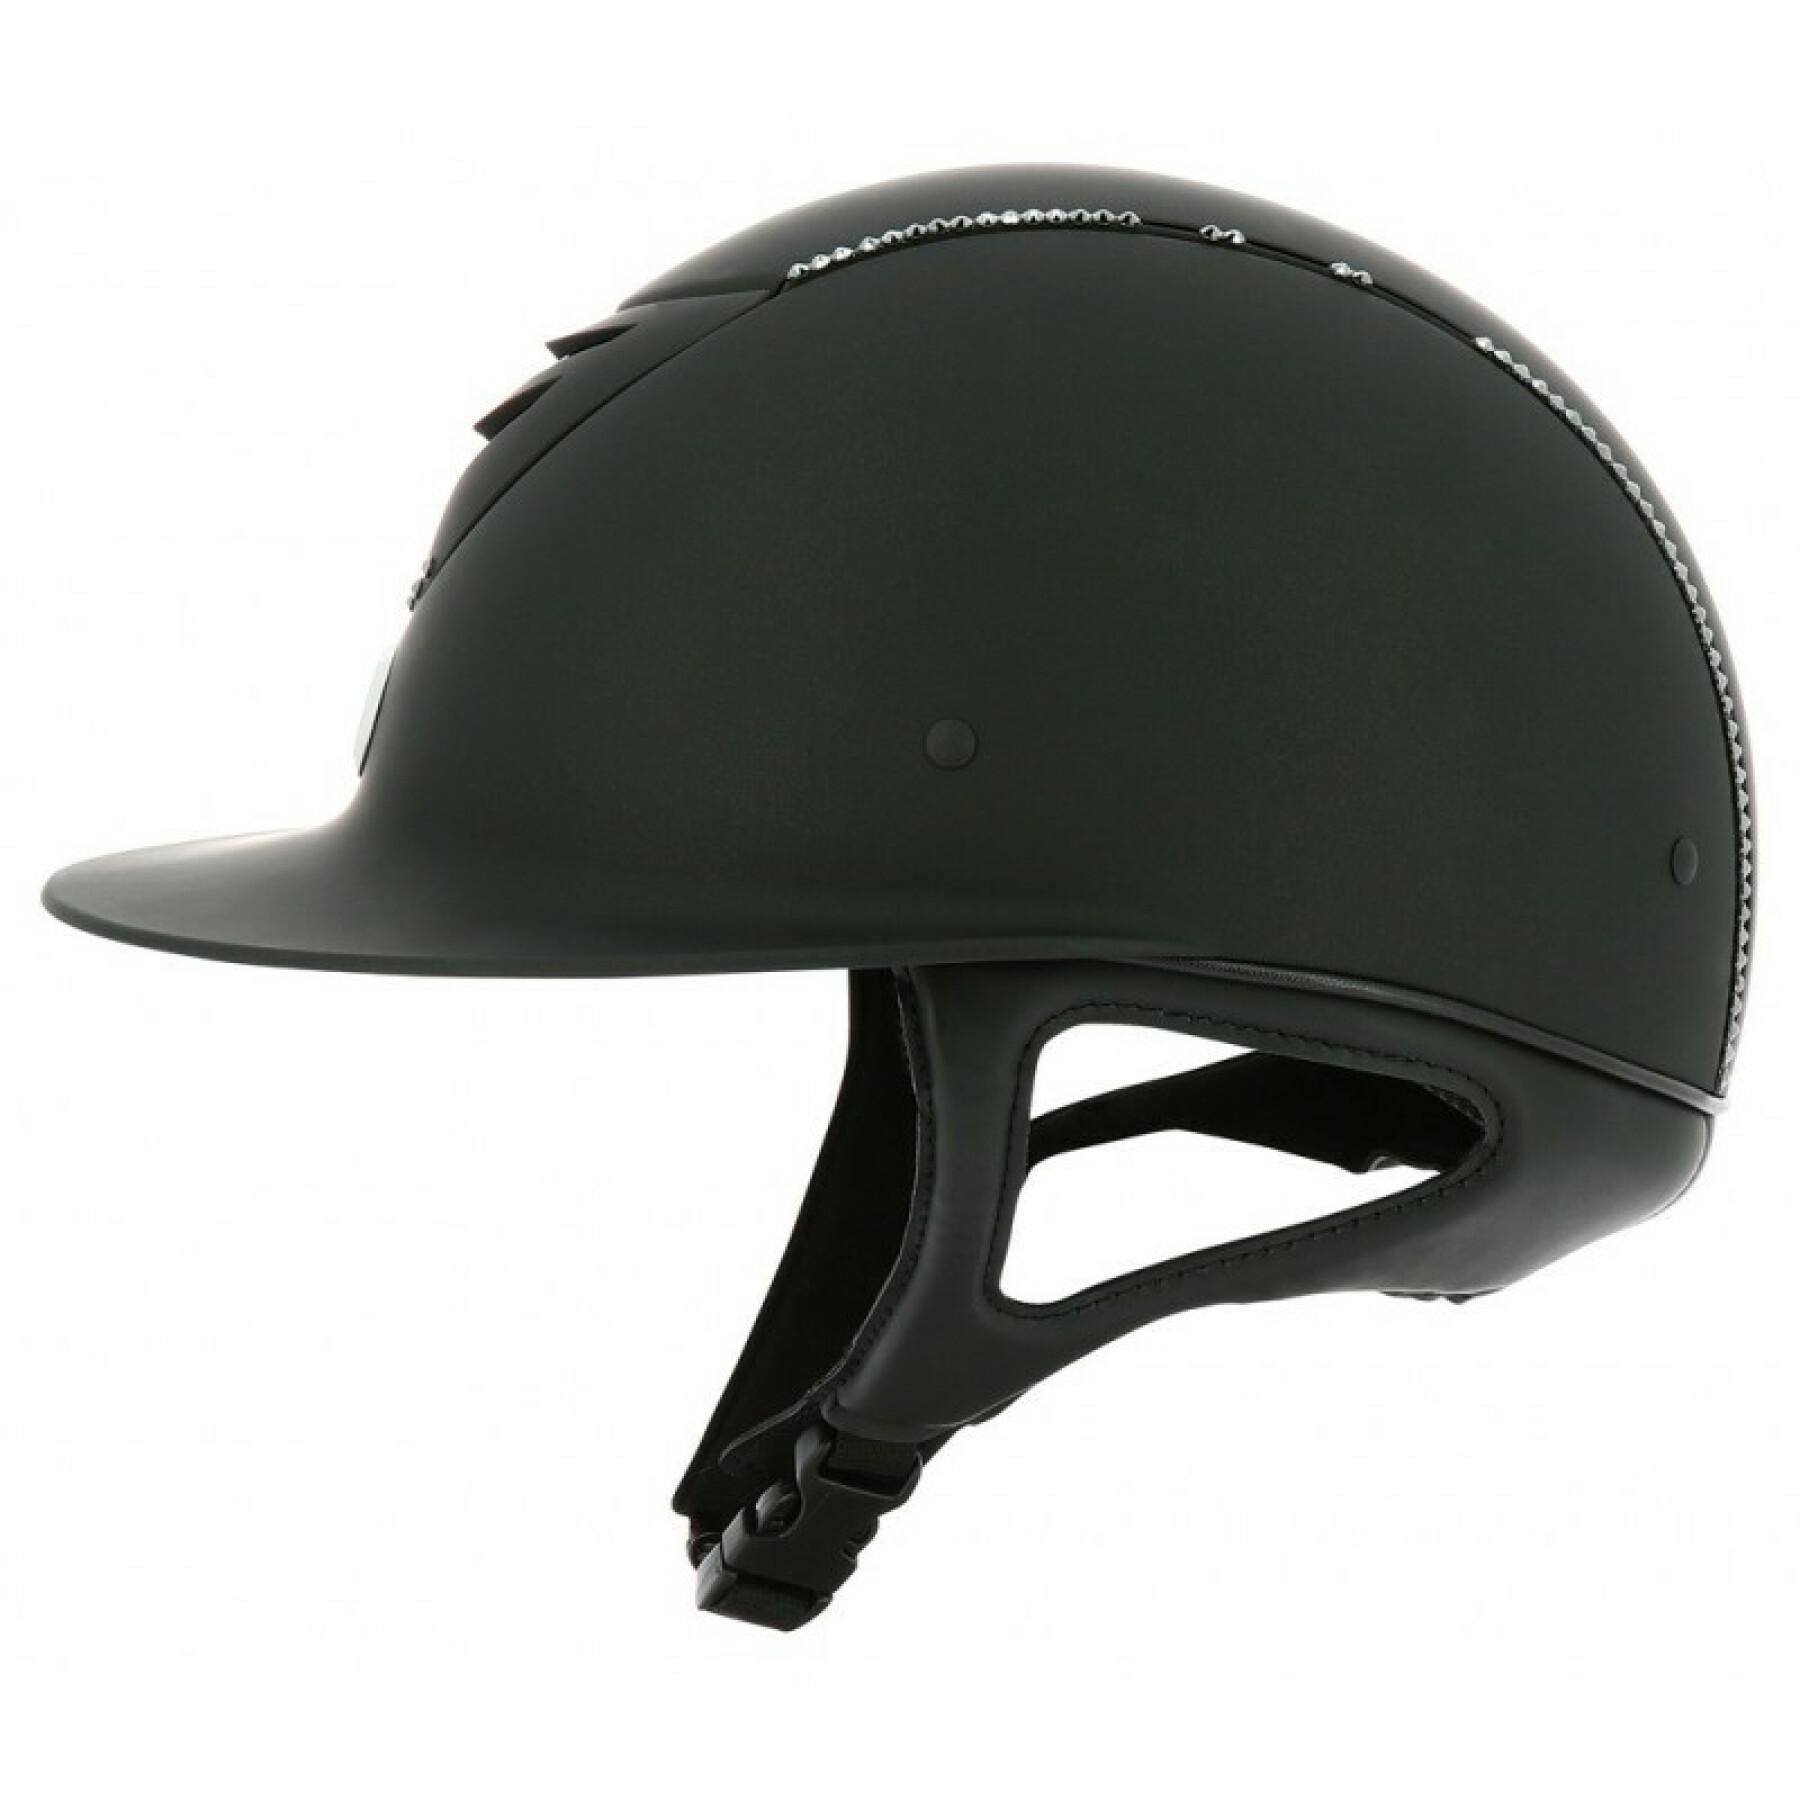 Riding helmet Pro Series Elégance crystal